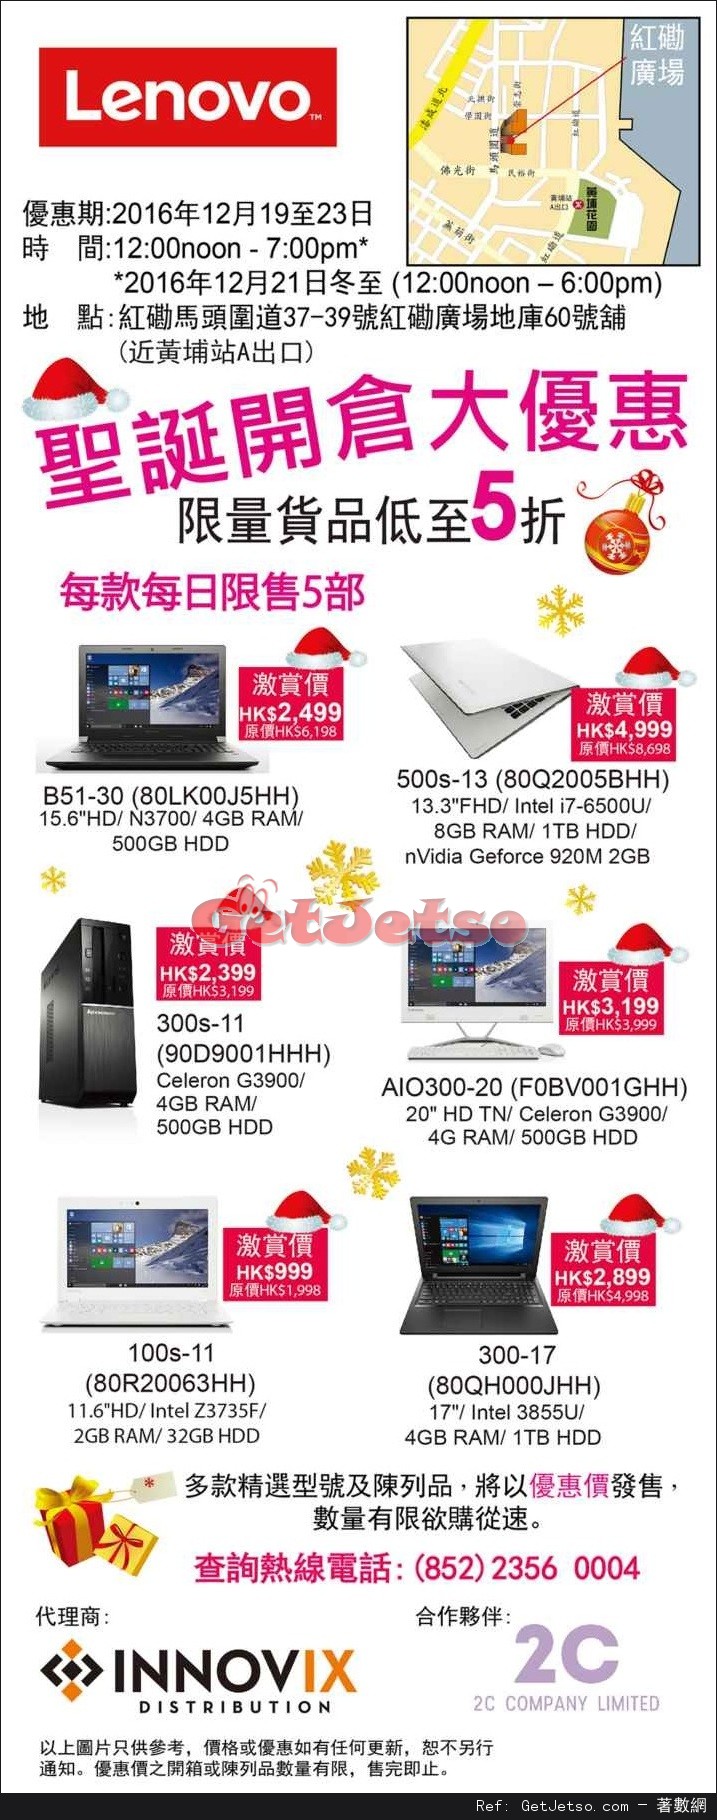 Lenovo 聖誕開倉低至半價優惠(至16年12月23日)圖片1